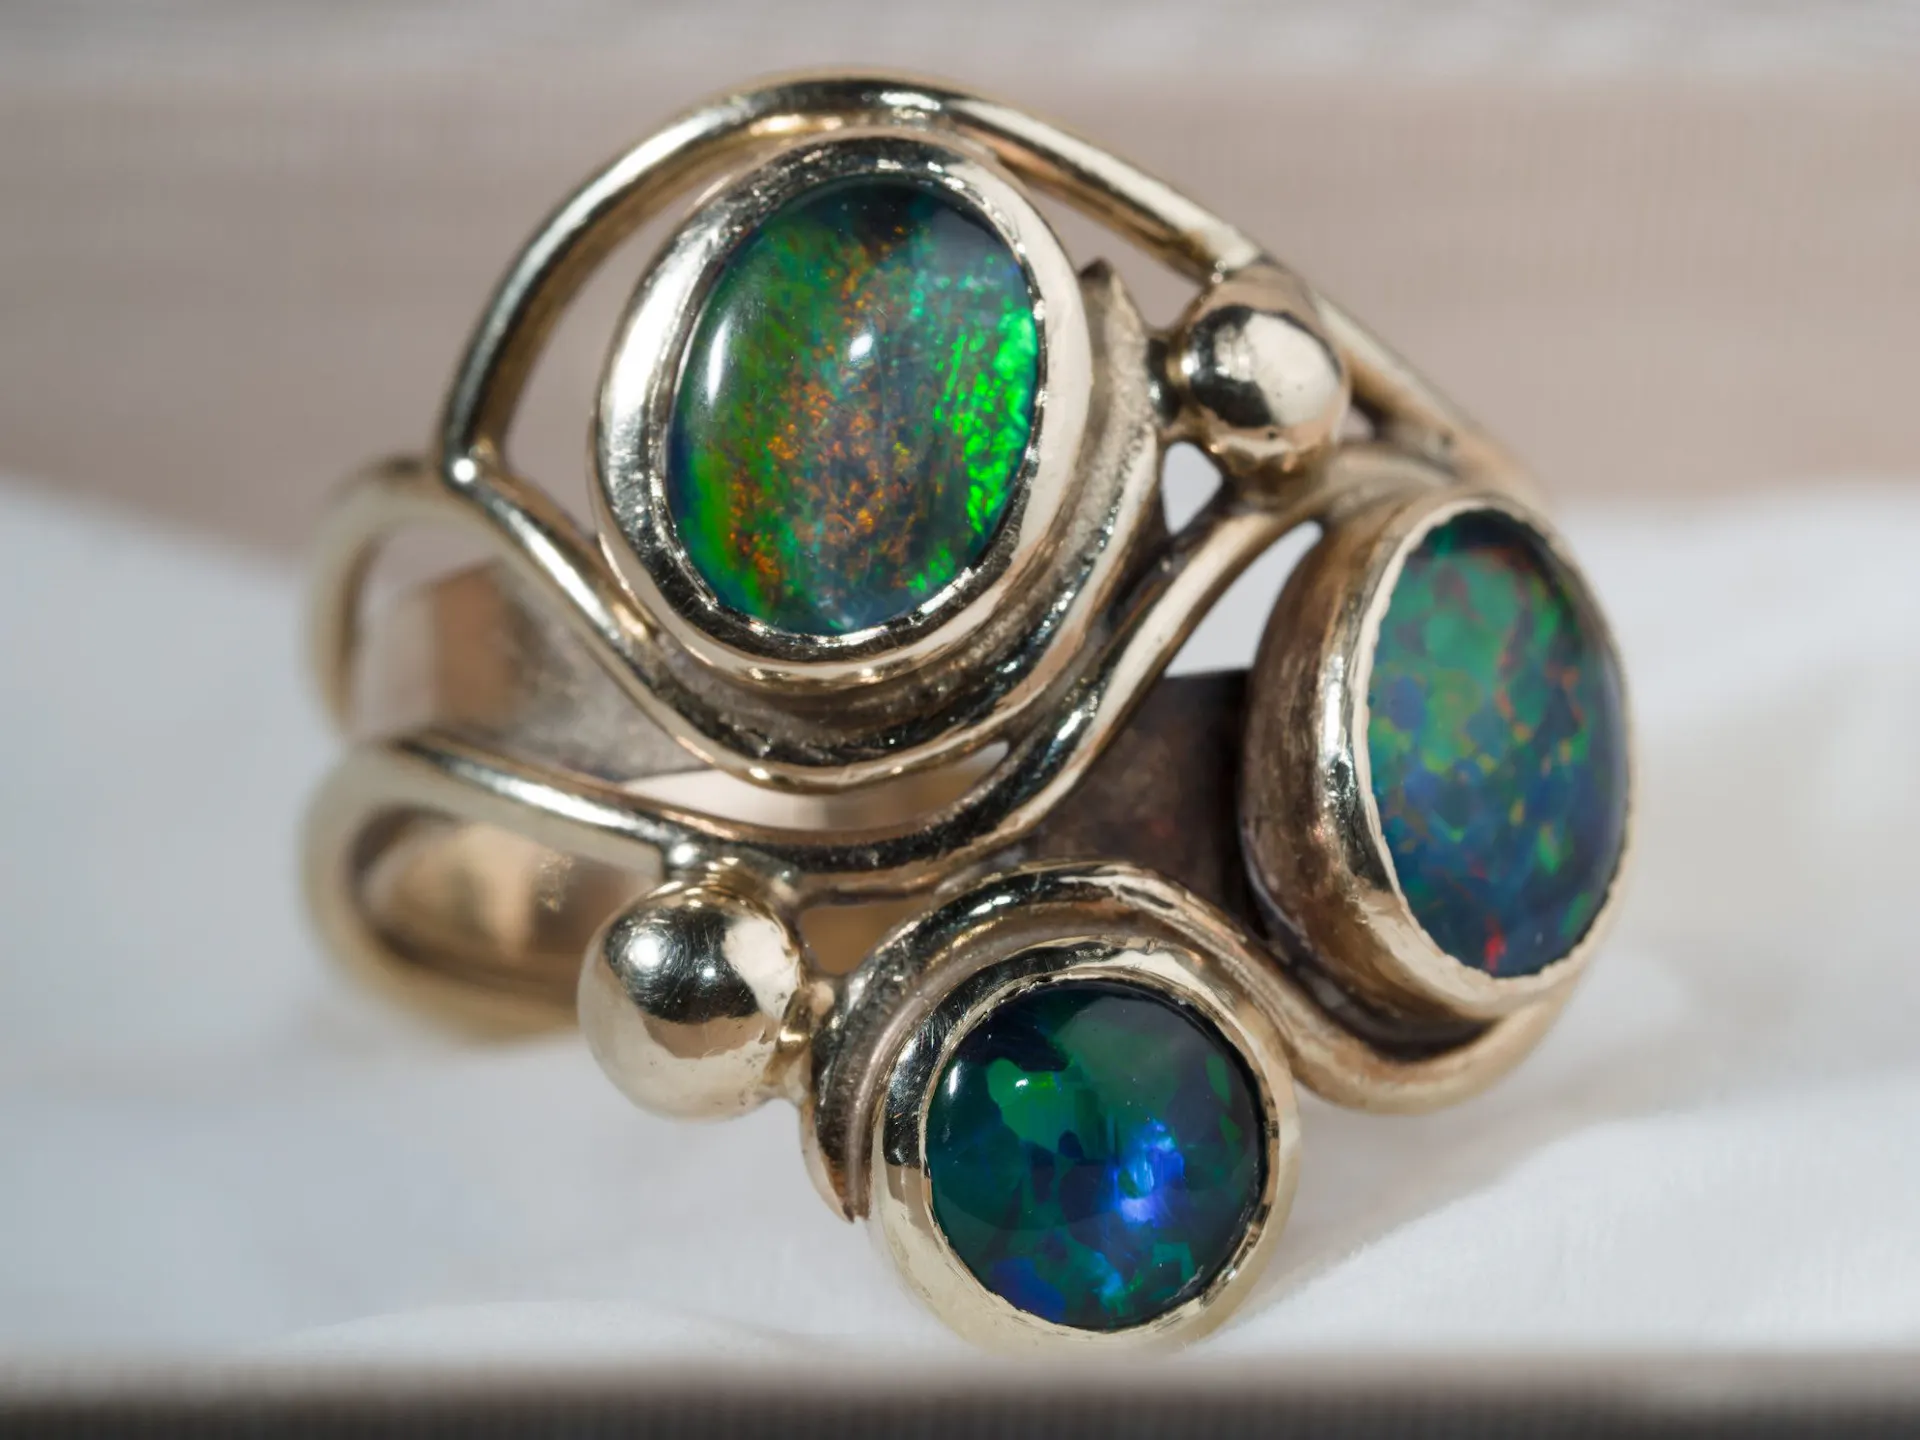 bezel-set opals - protective gem settings